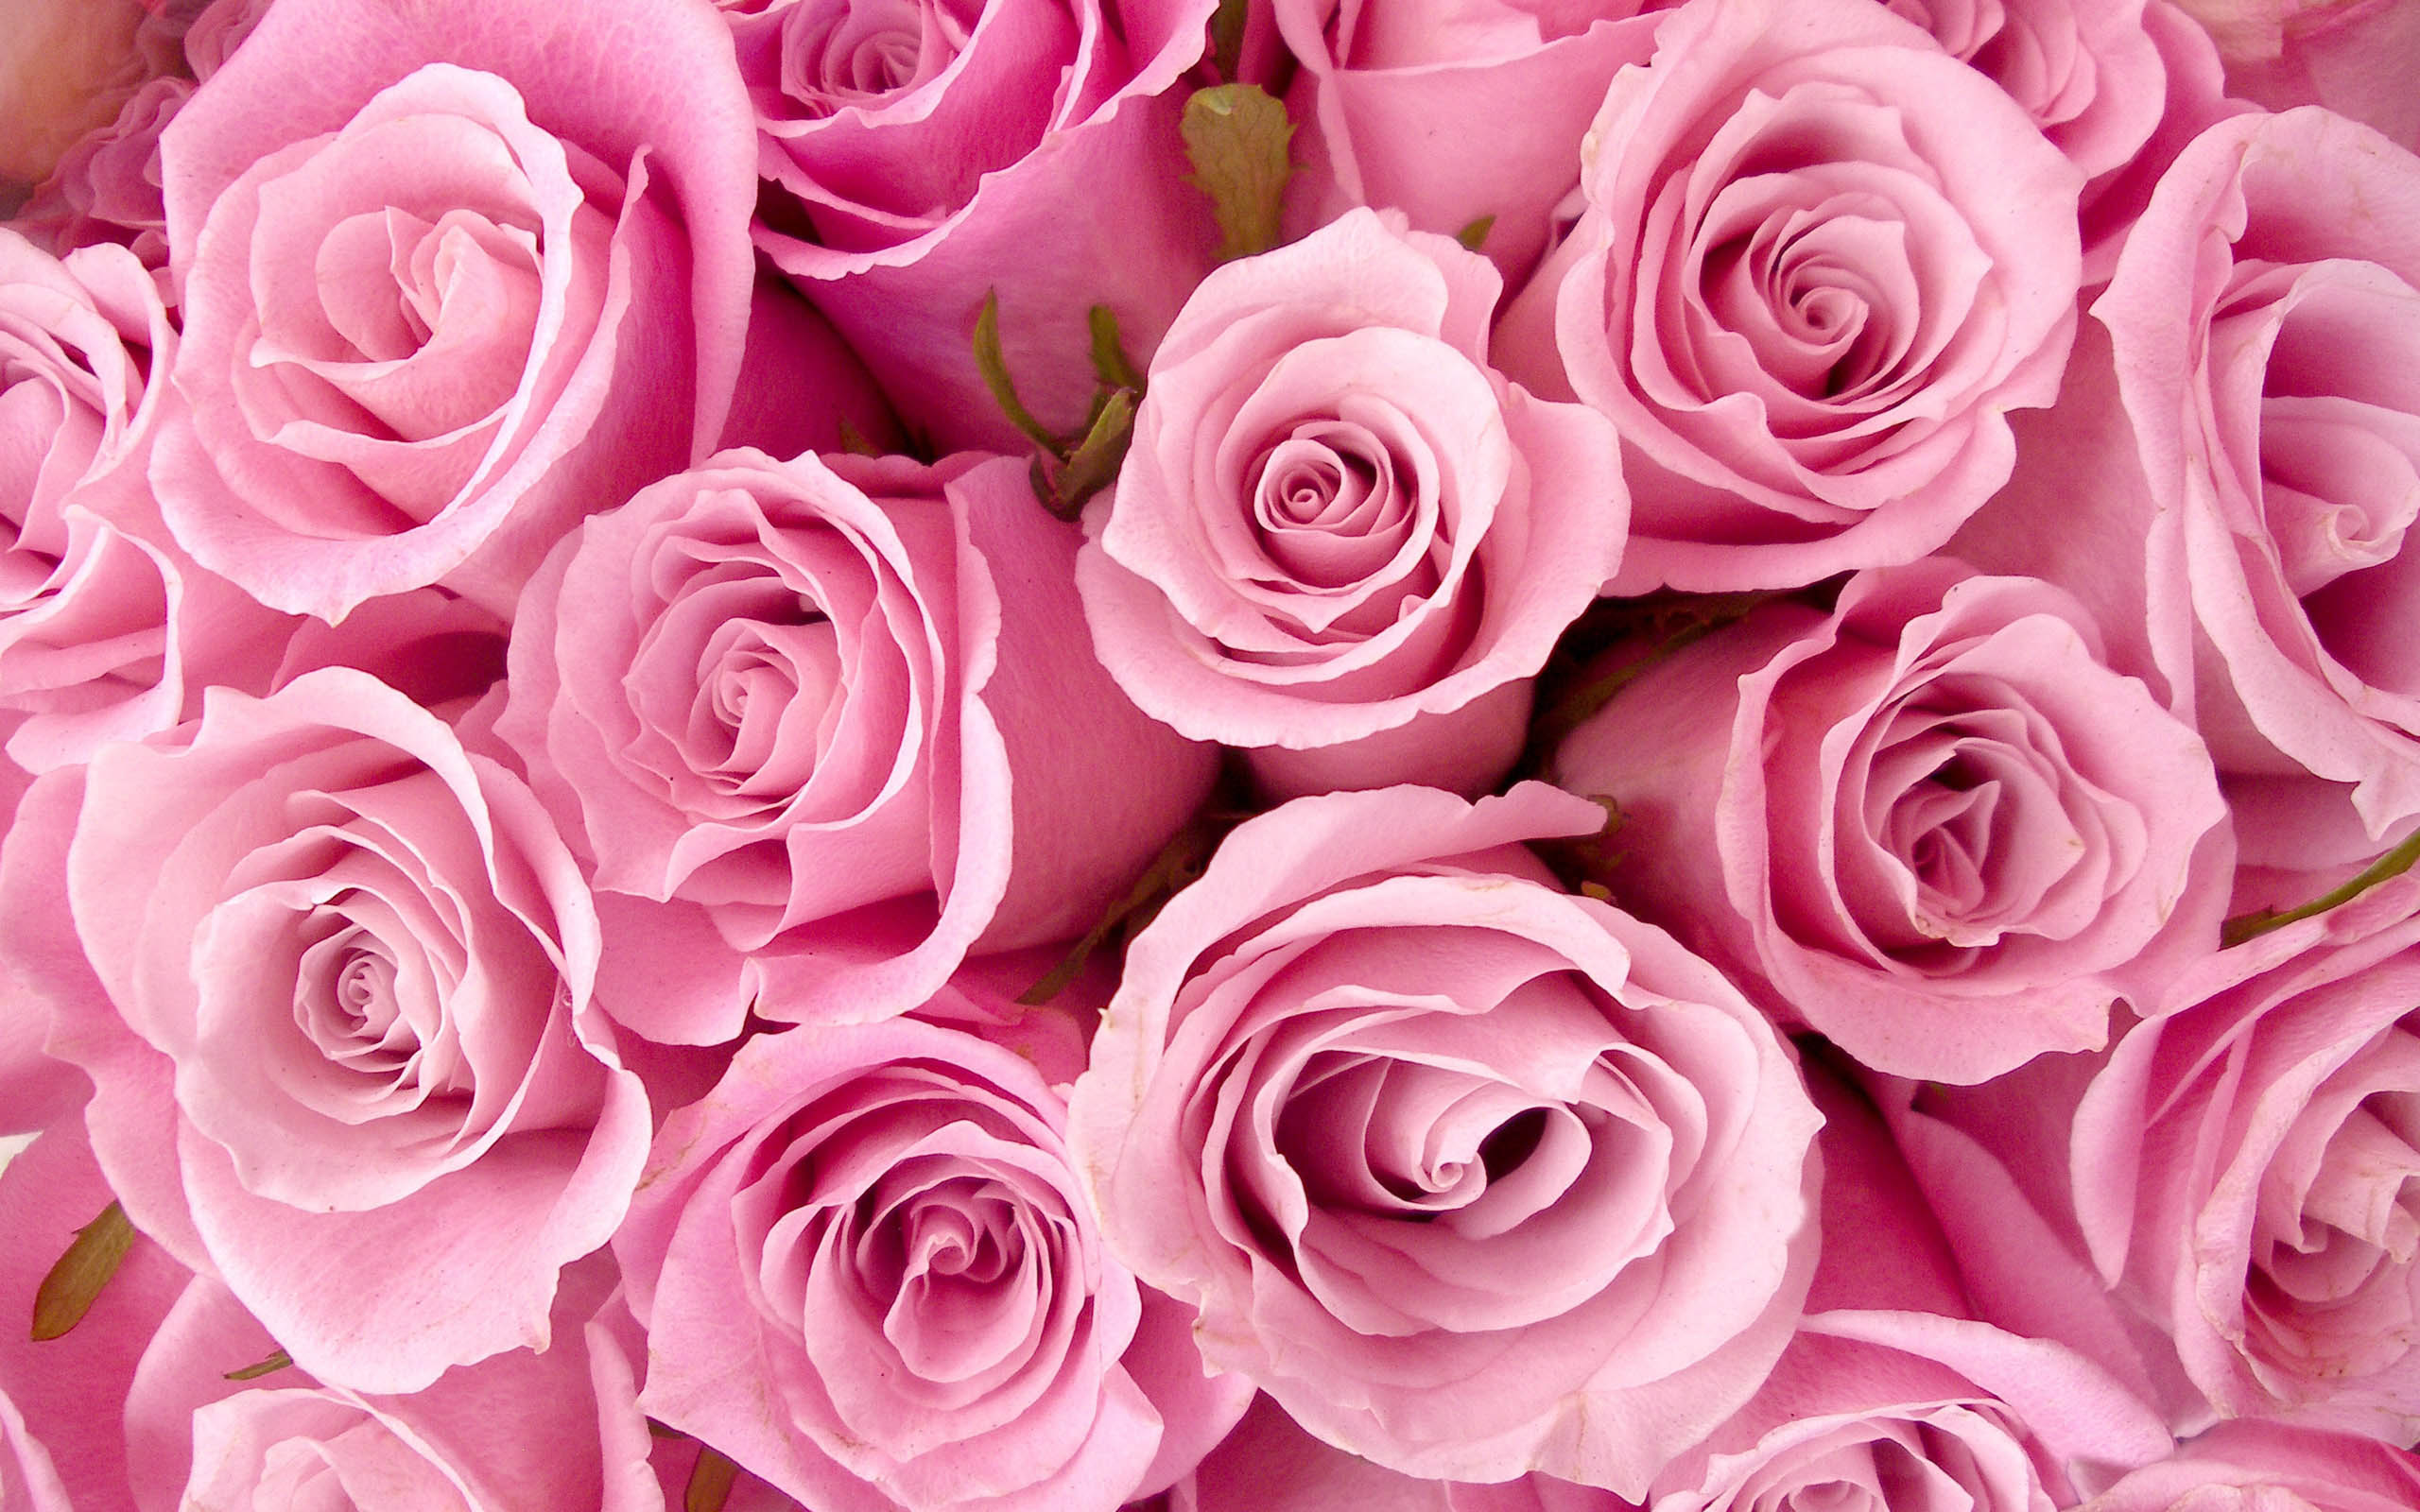 Special Pink Roses Wallpaper Desktop For